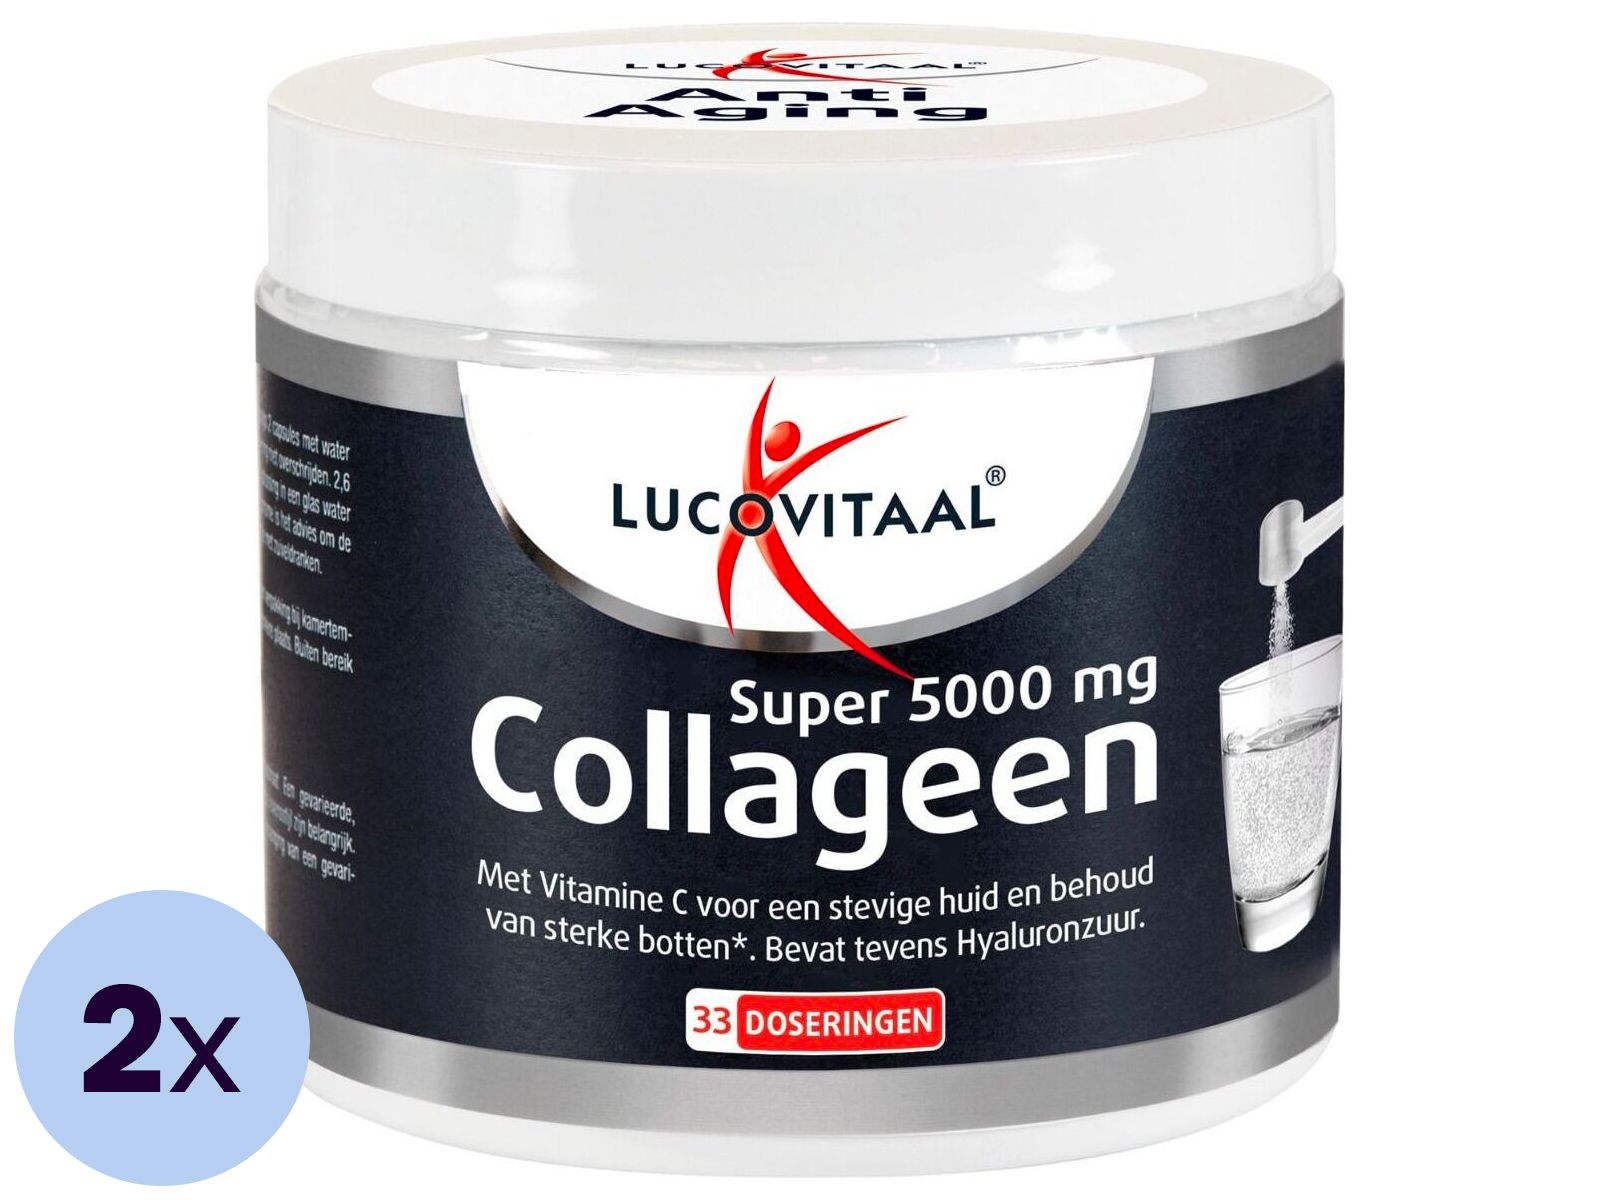 2x-lucovitaal-collagen-super-pulver-5000-mg